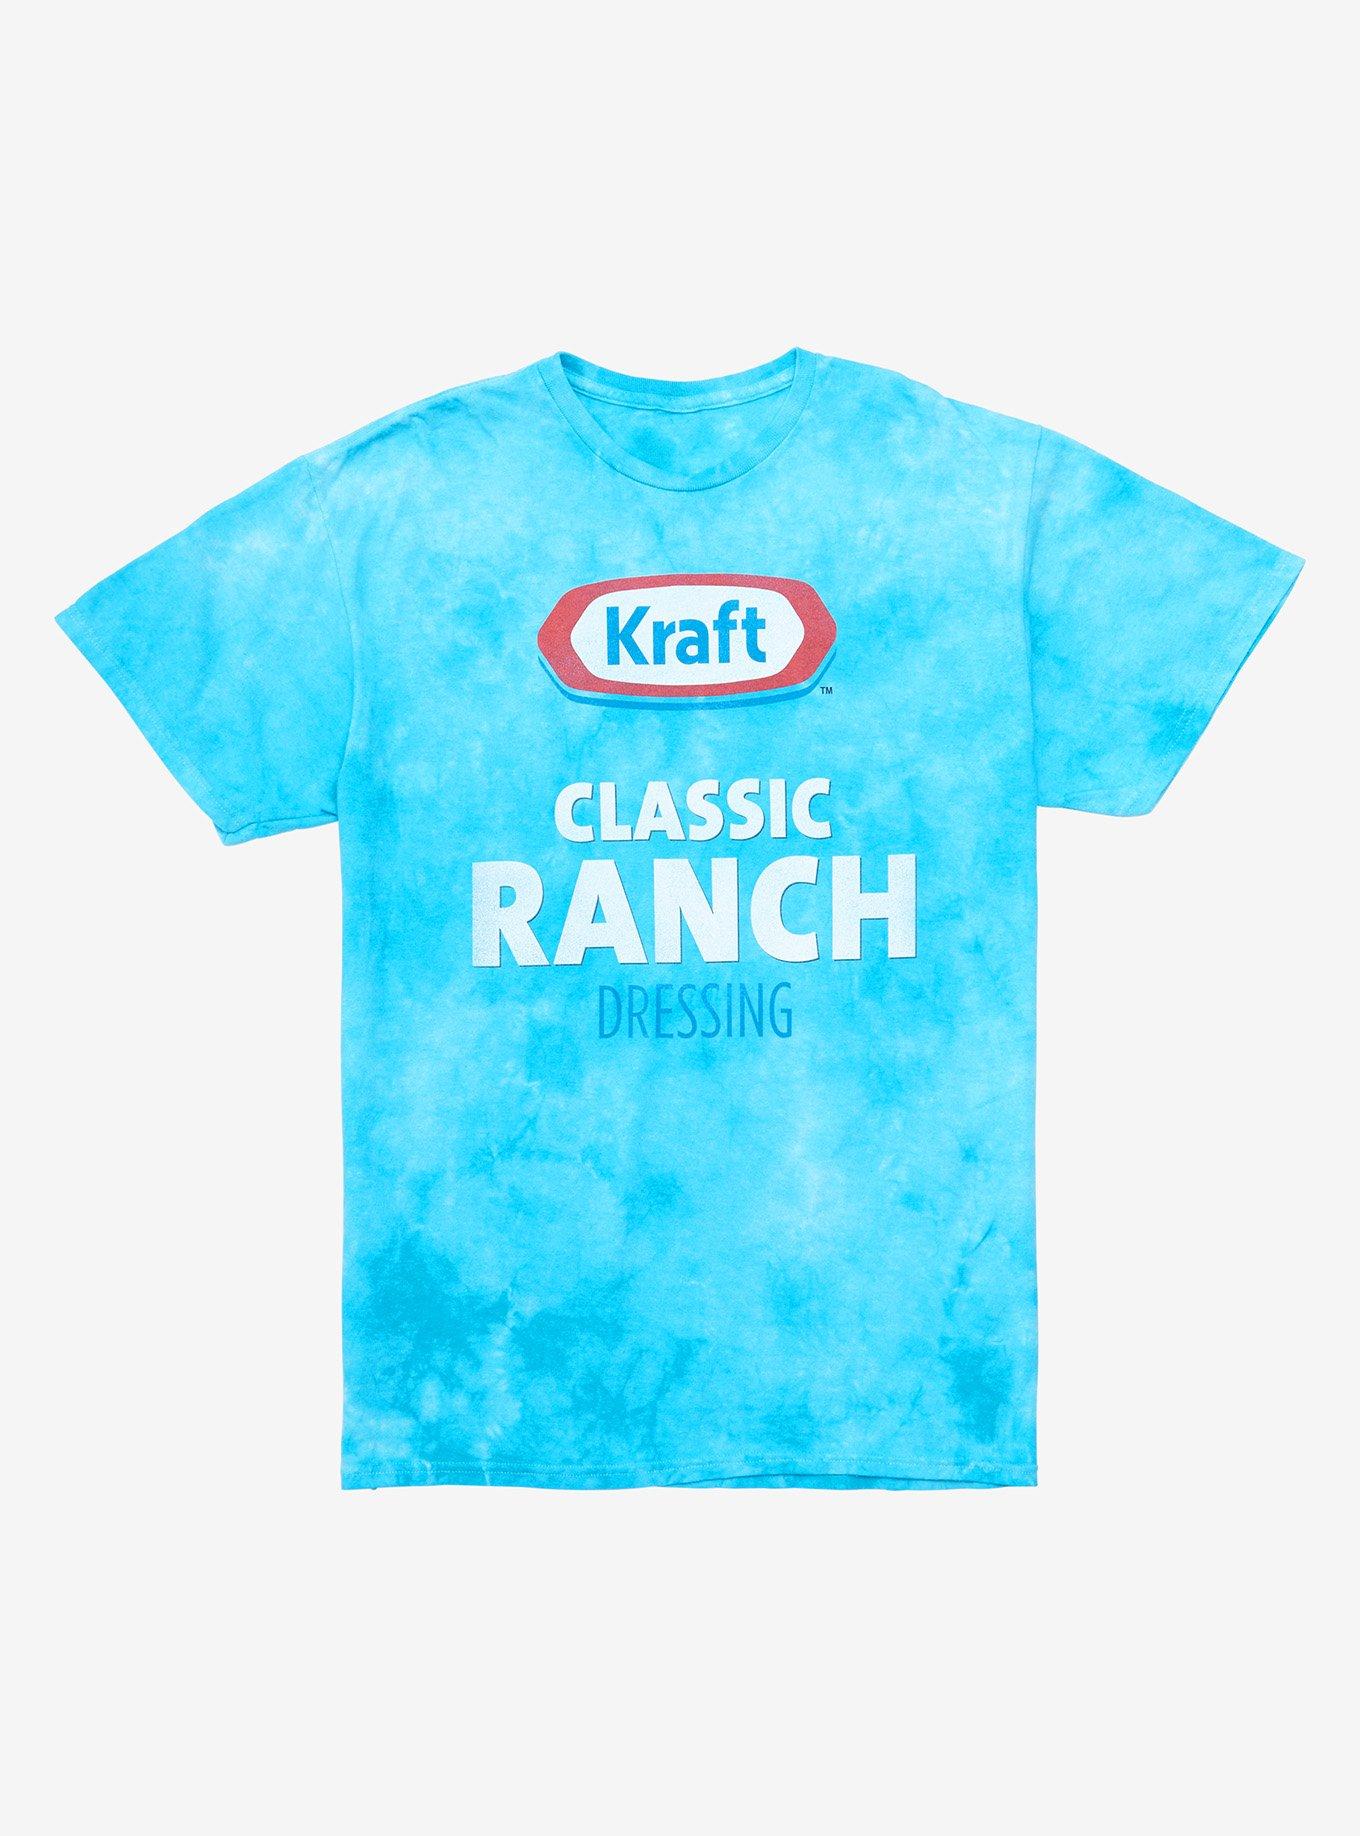 Kraft Classic Ranch Dressing Tie-Dye T-Shirt, TIE DYE, hi-res